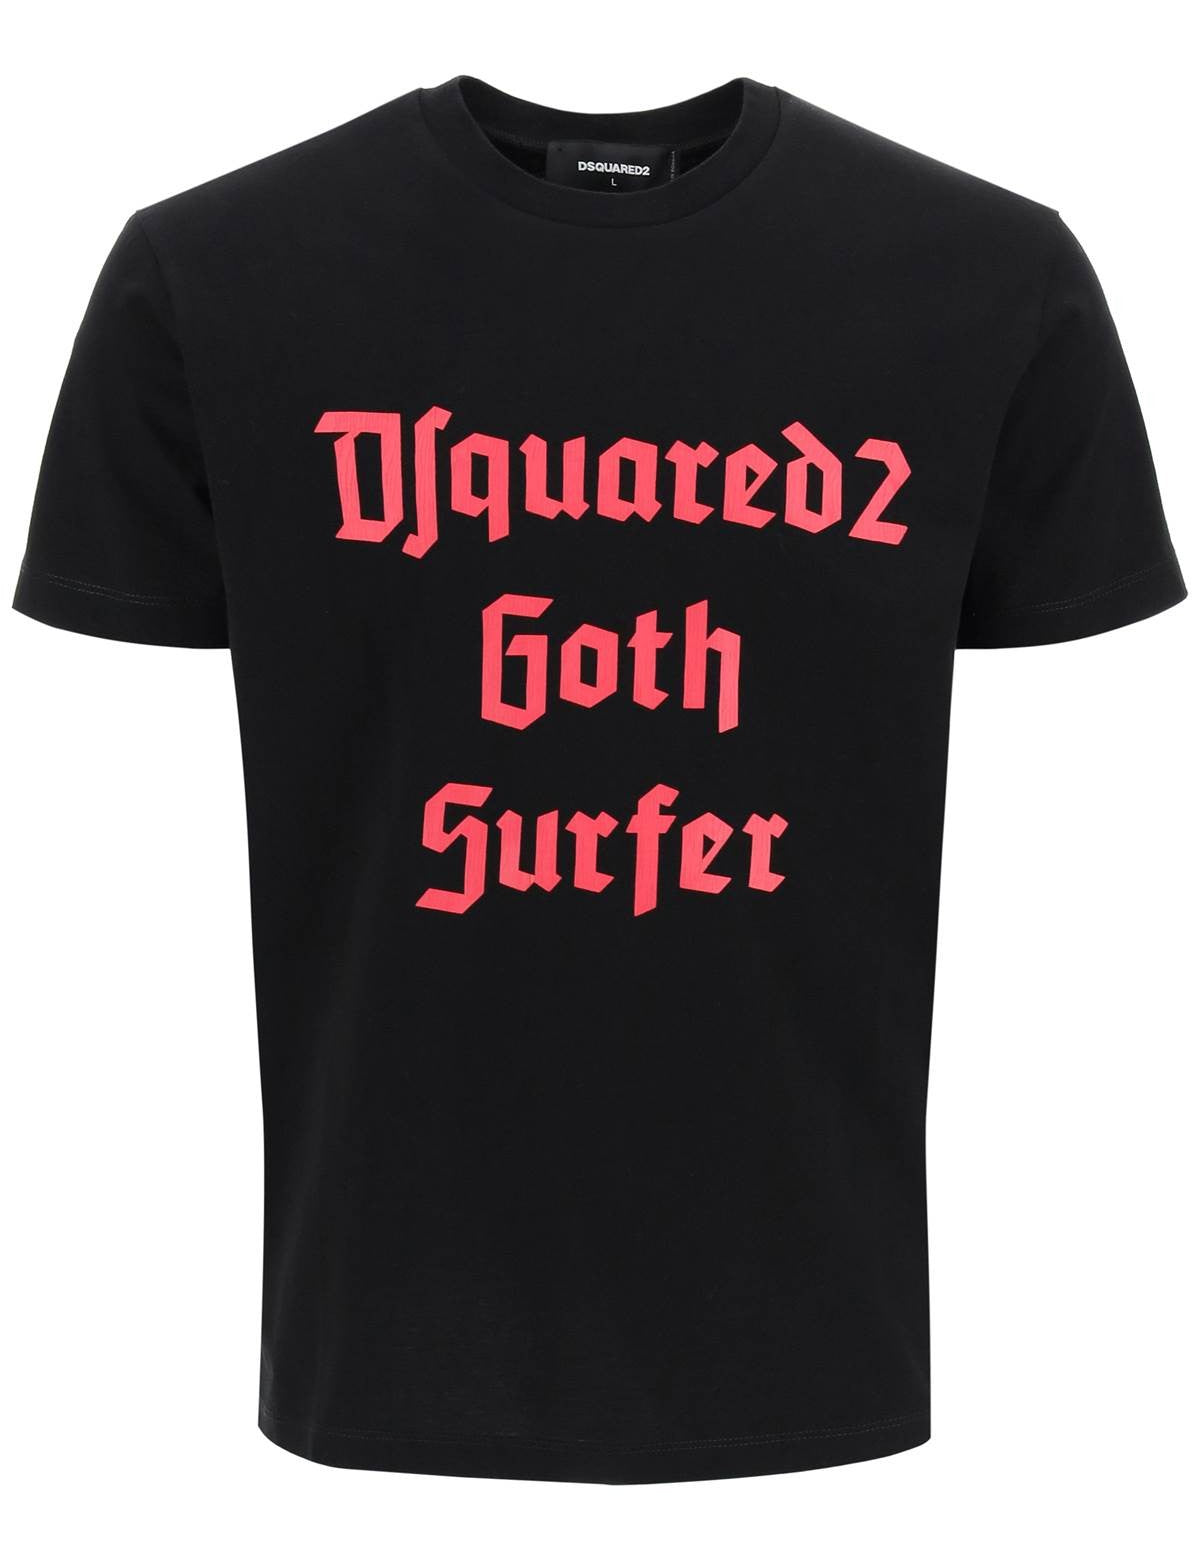 dsquared2-d2-goth-surfer-t-shirt.jpg